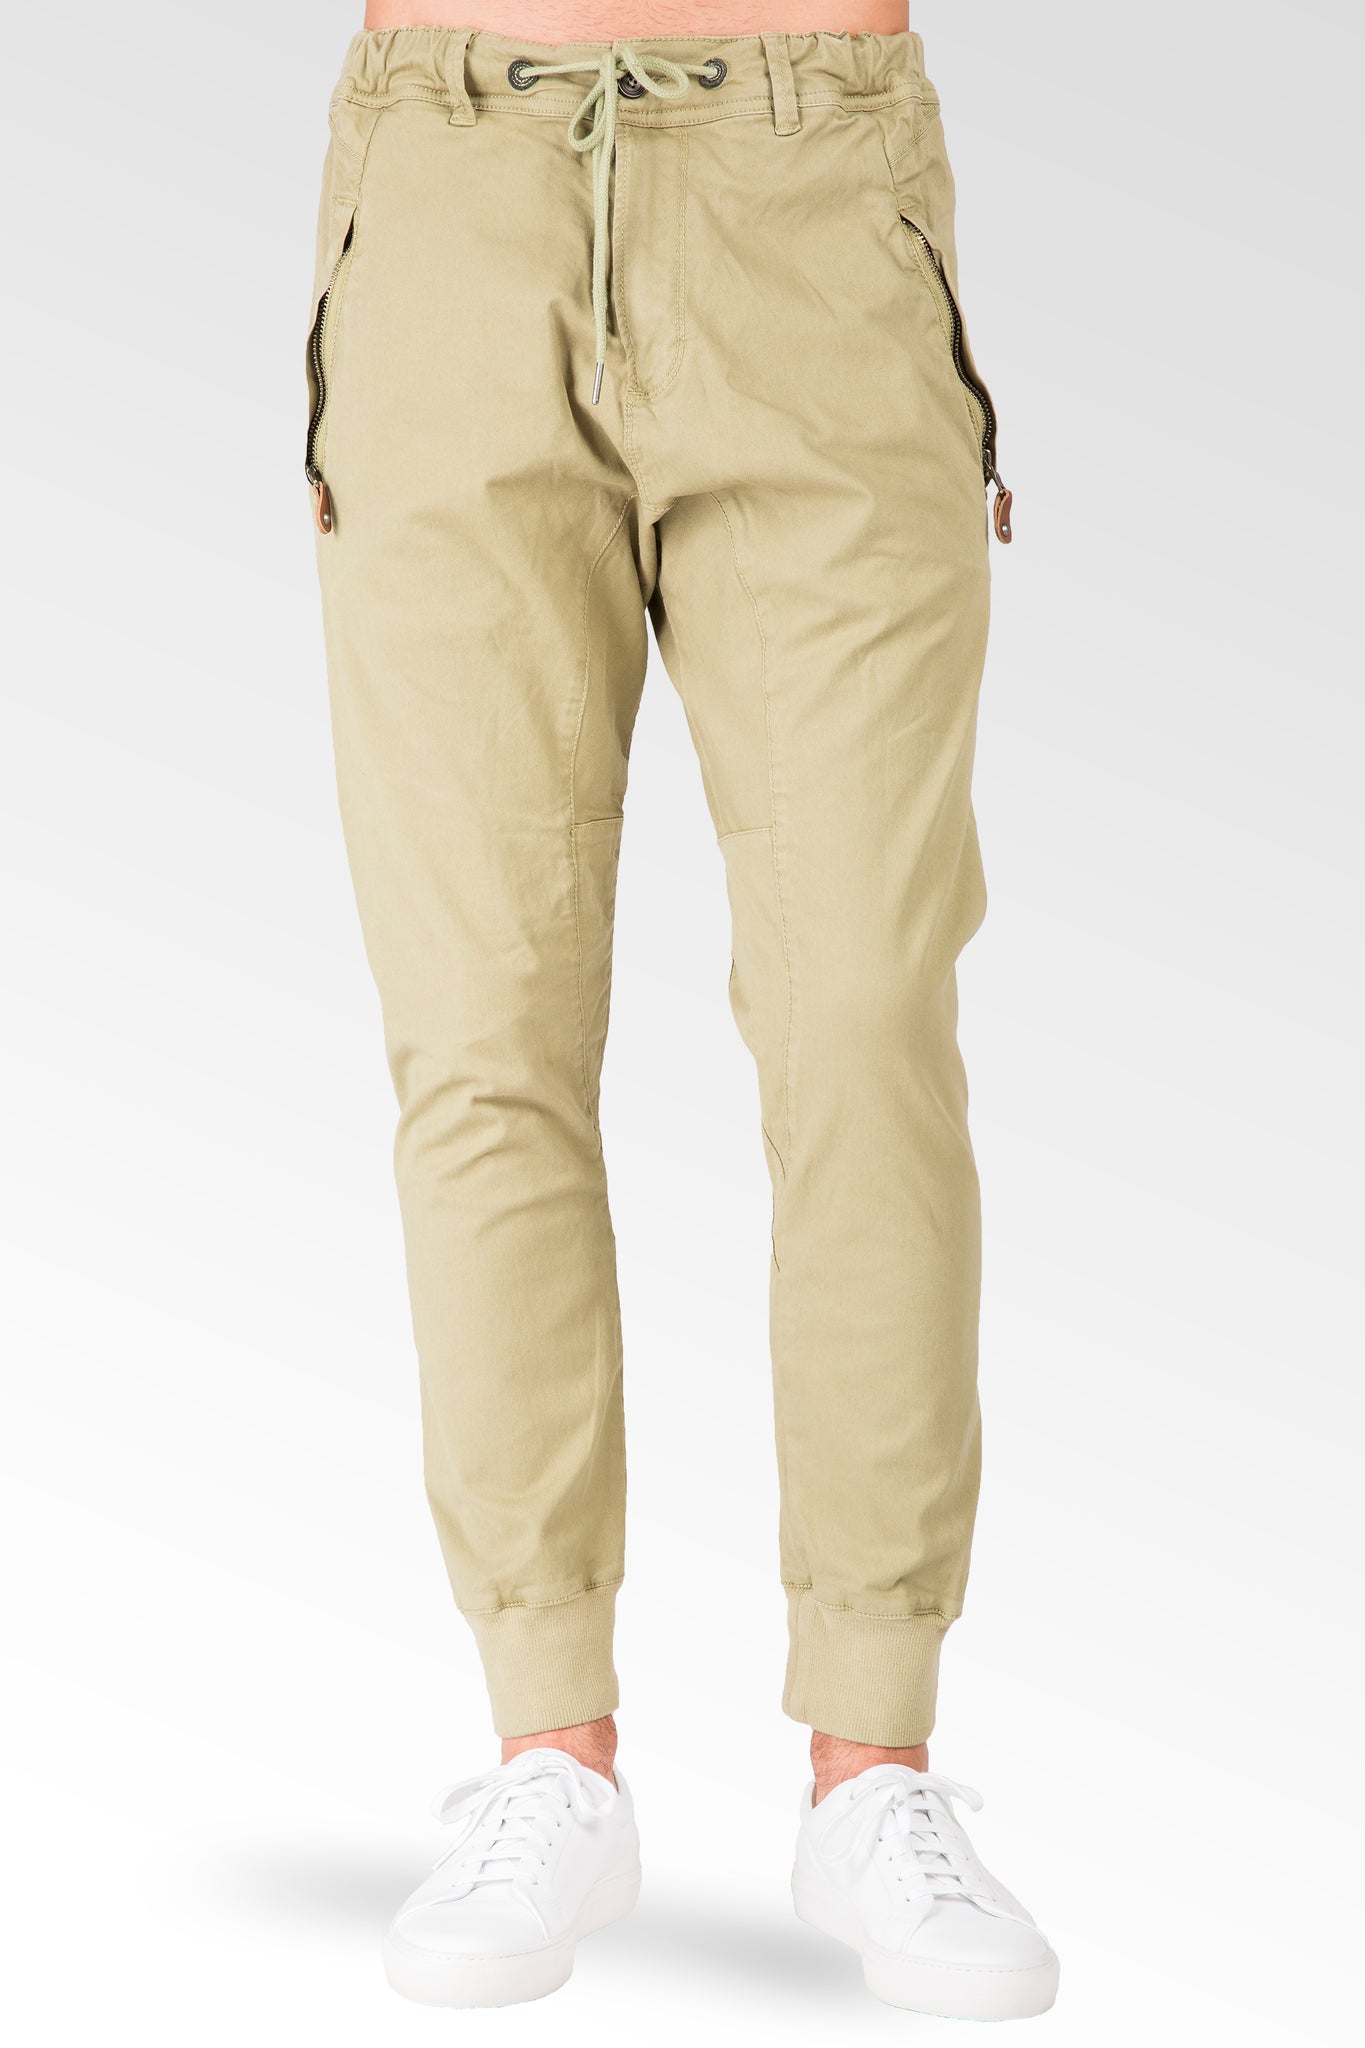 Drop Crotch Fit Avocado Green Premium Stretch Twill Jogger Jeans Zipper Pockets